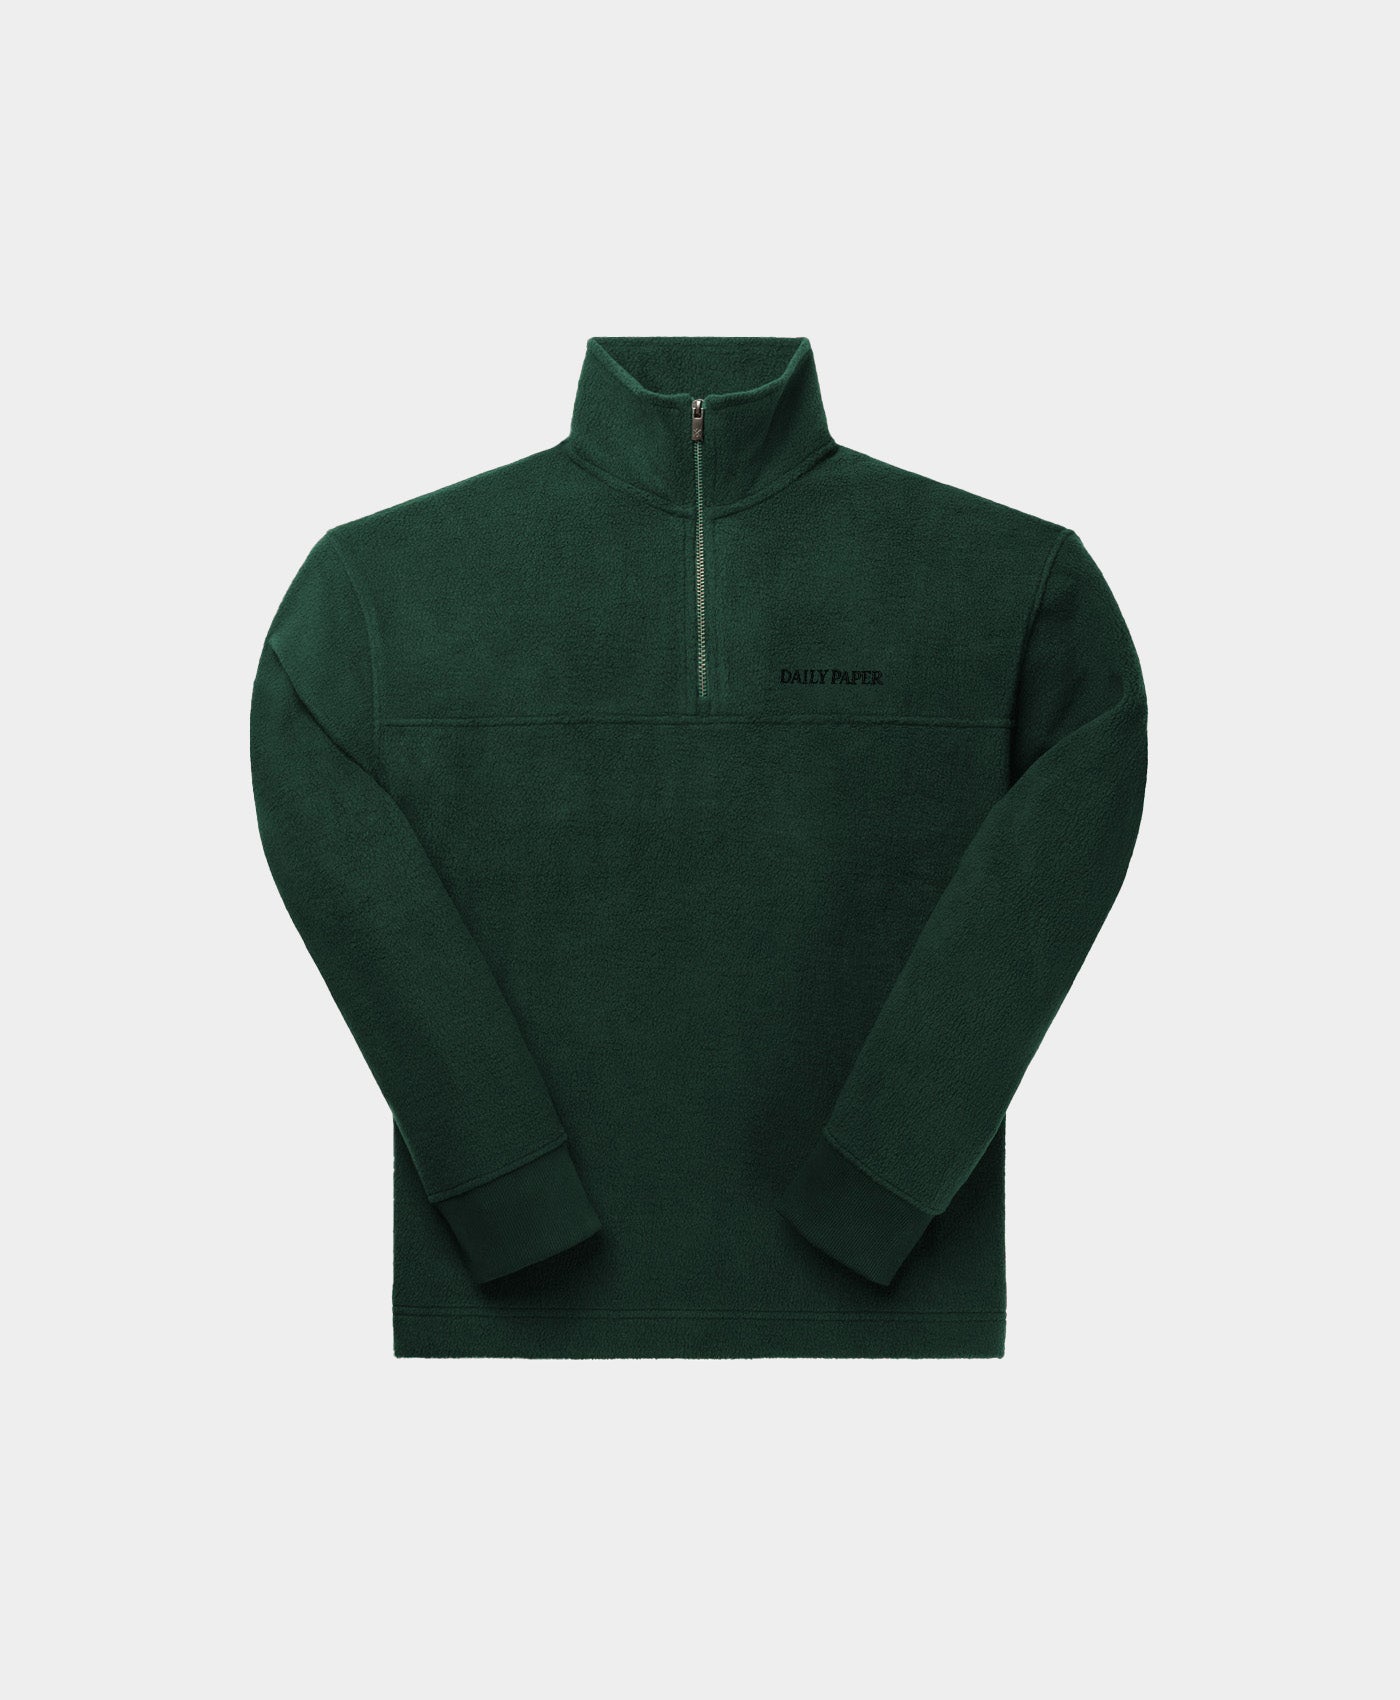 DP - Pine Green Ramat Sweater - Packshot - Front